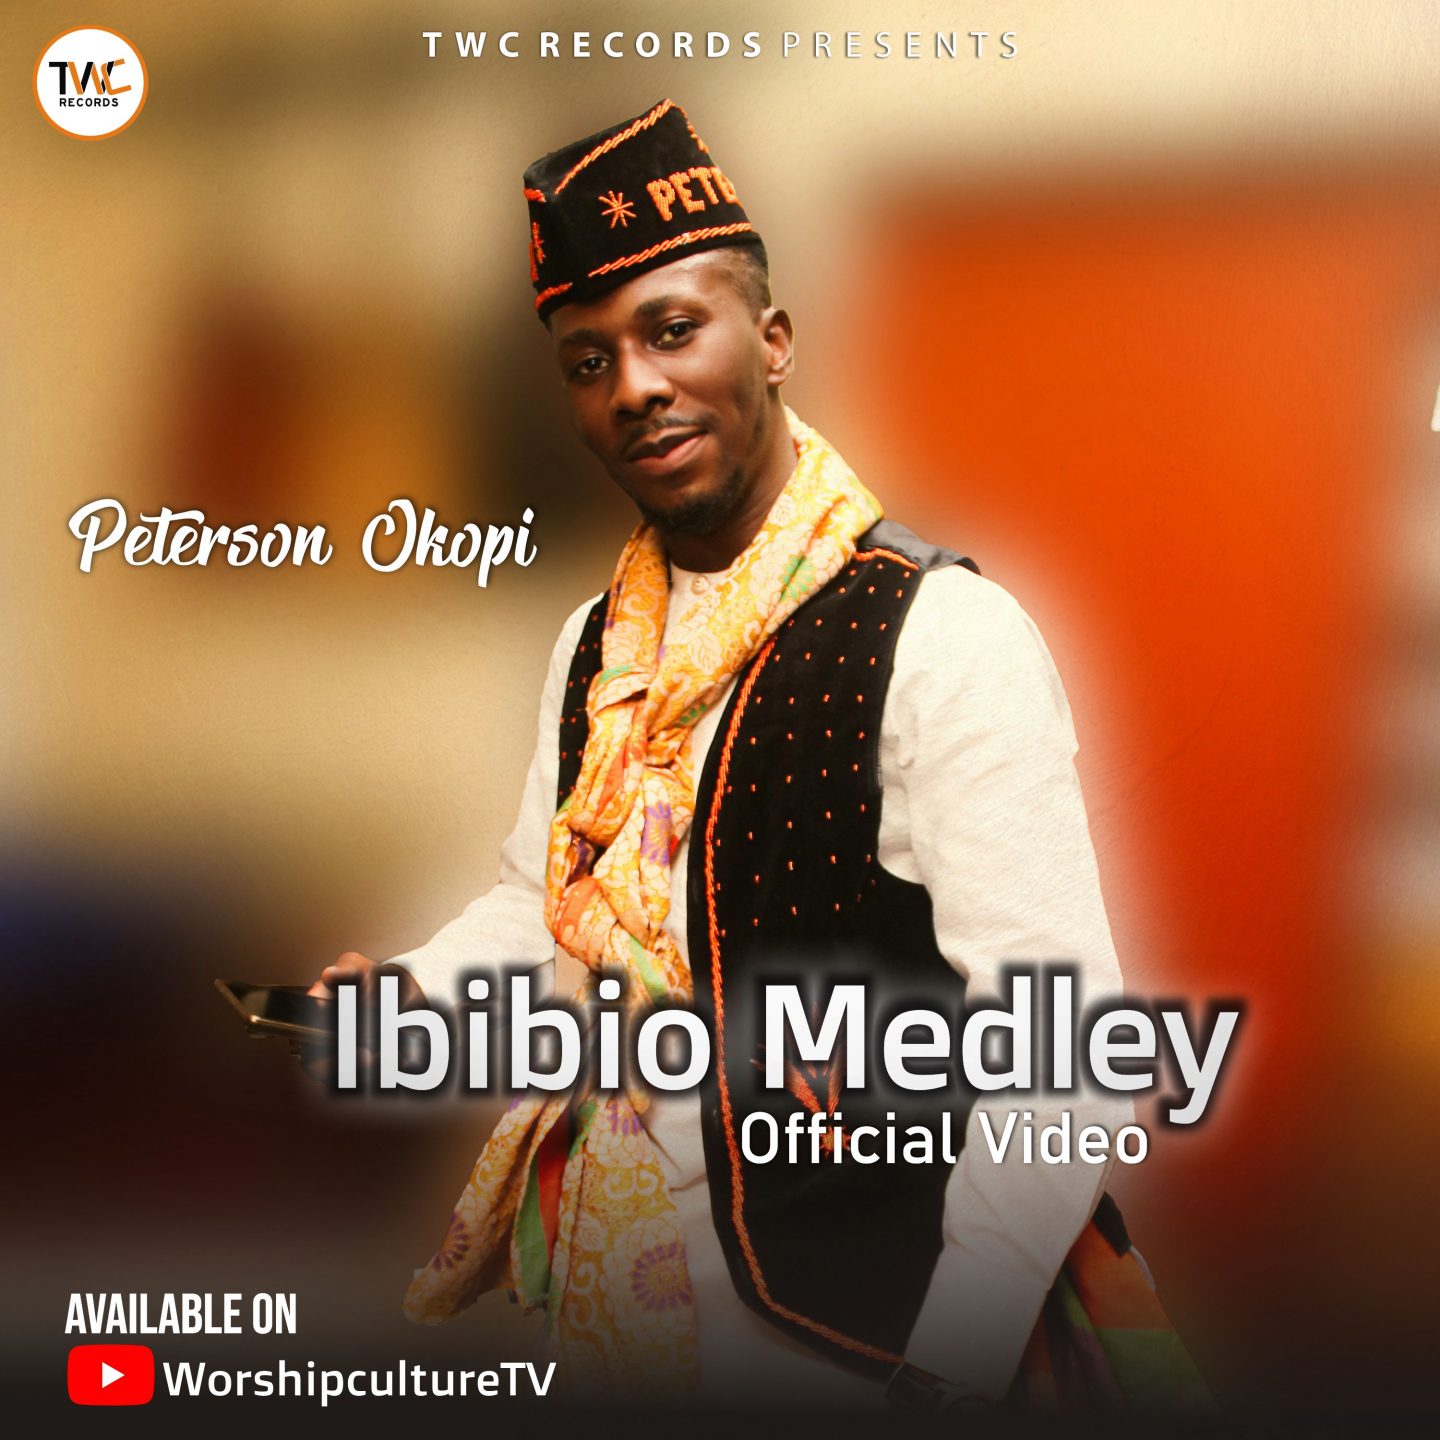 Download Peterson Okopi Ibibio Medley mp3